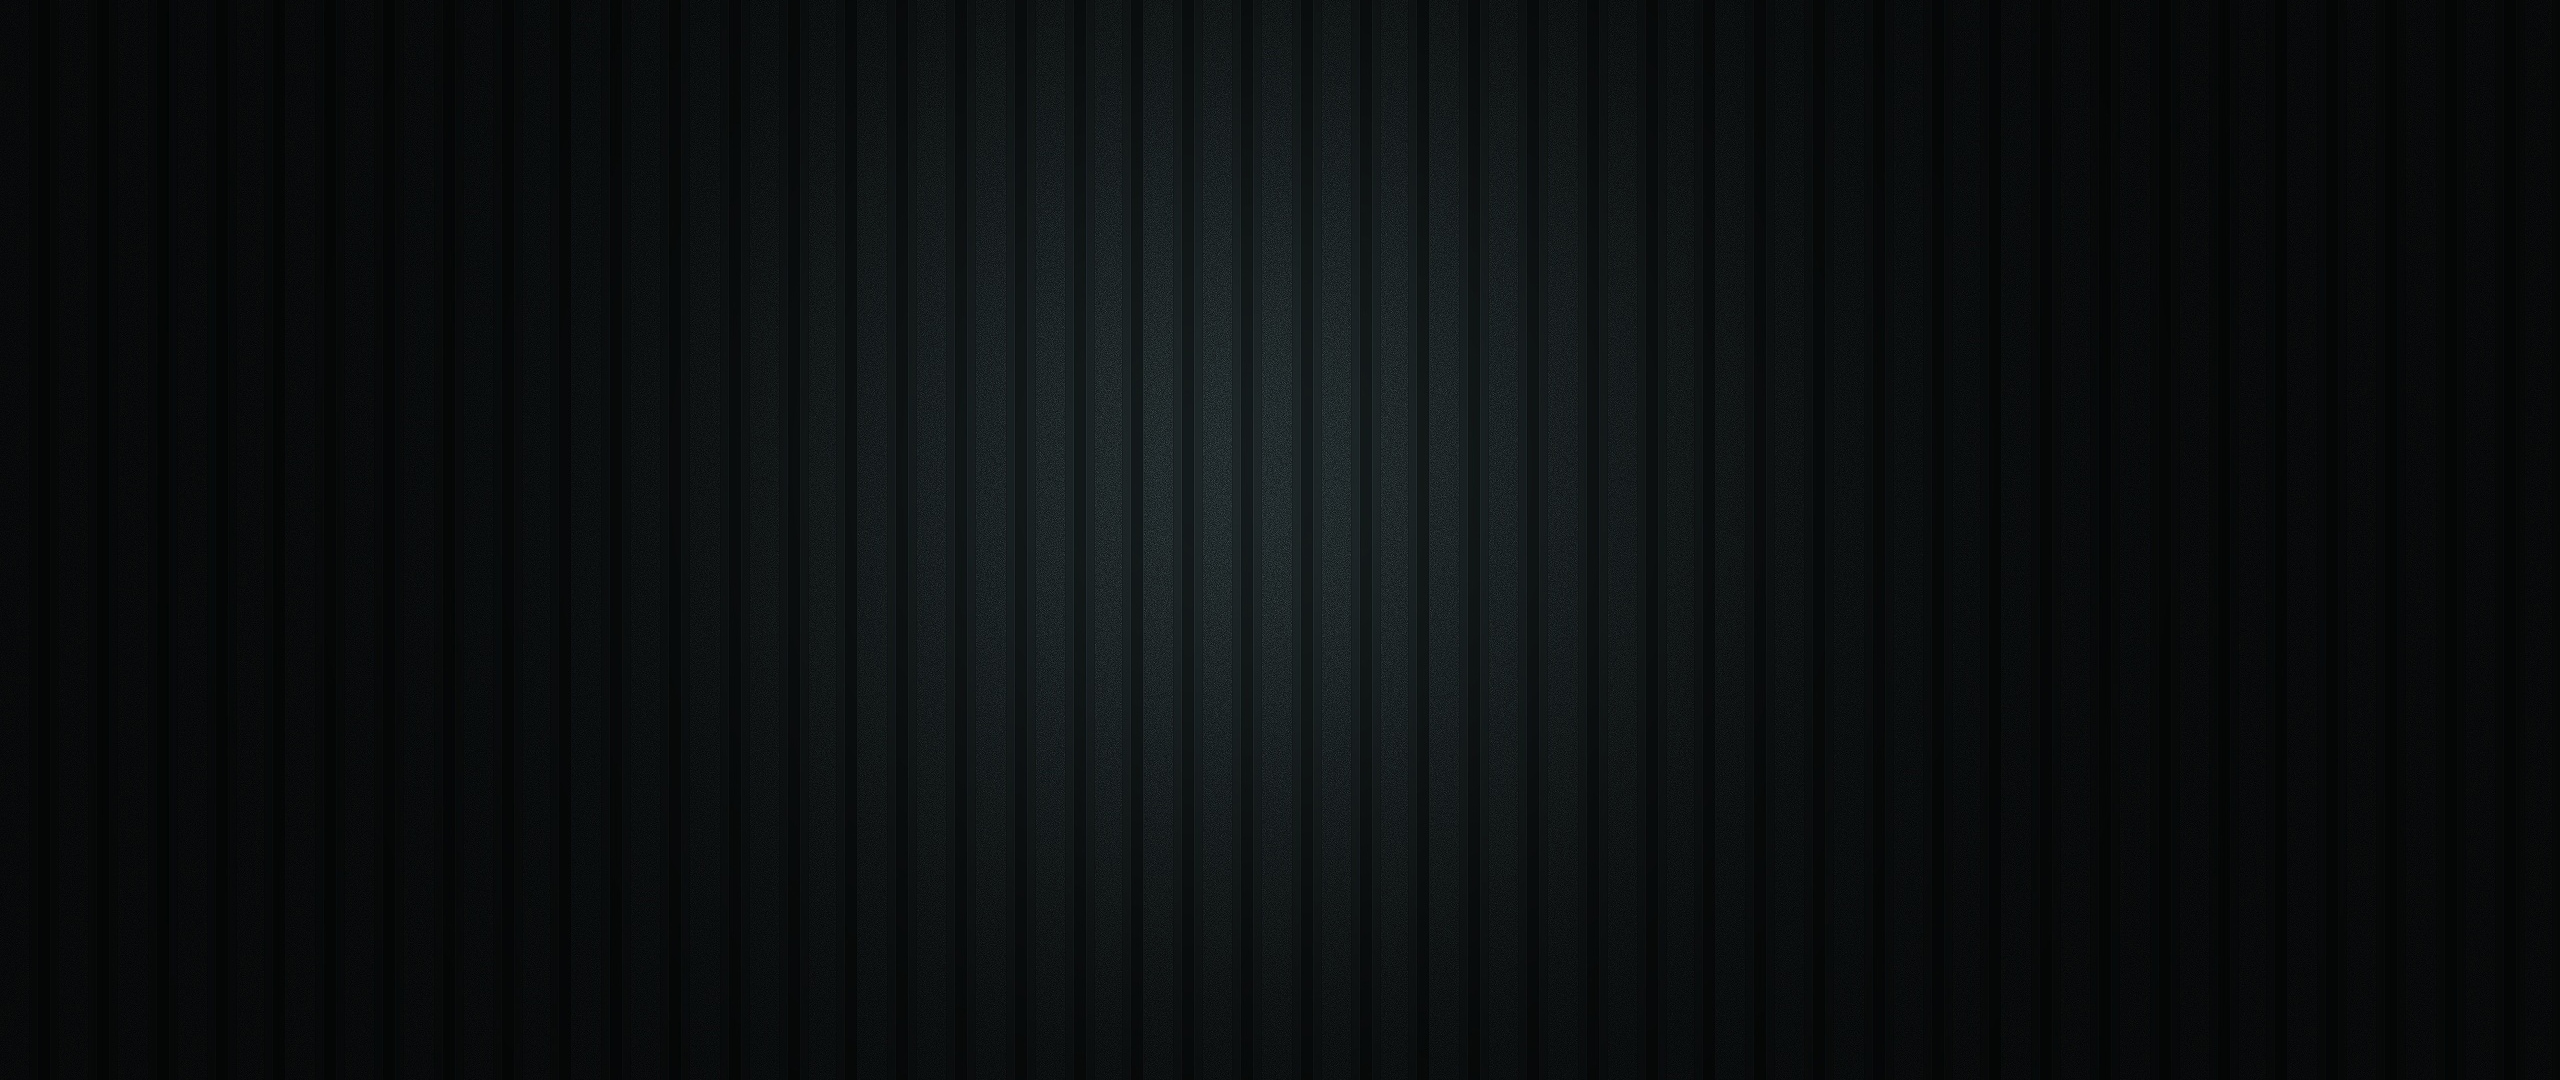 Wallpaper Black Lines Background Spot